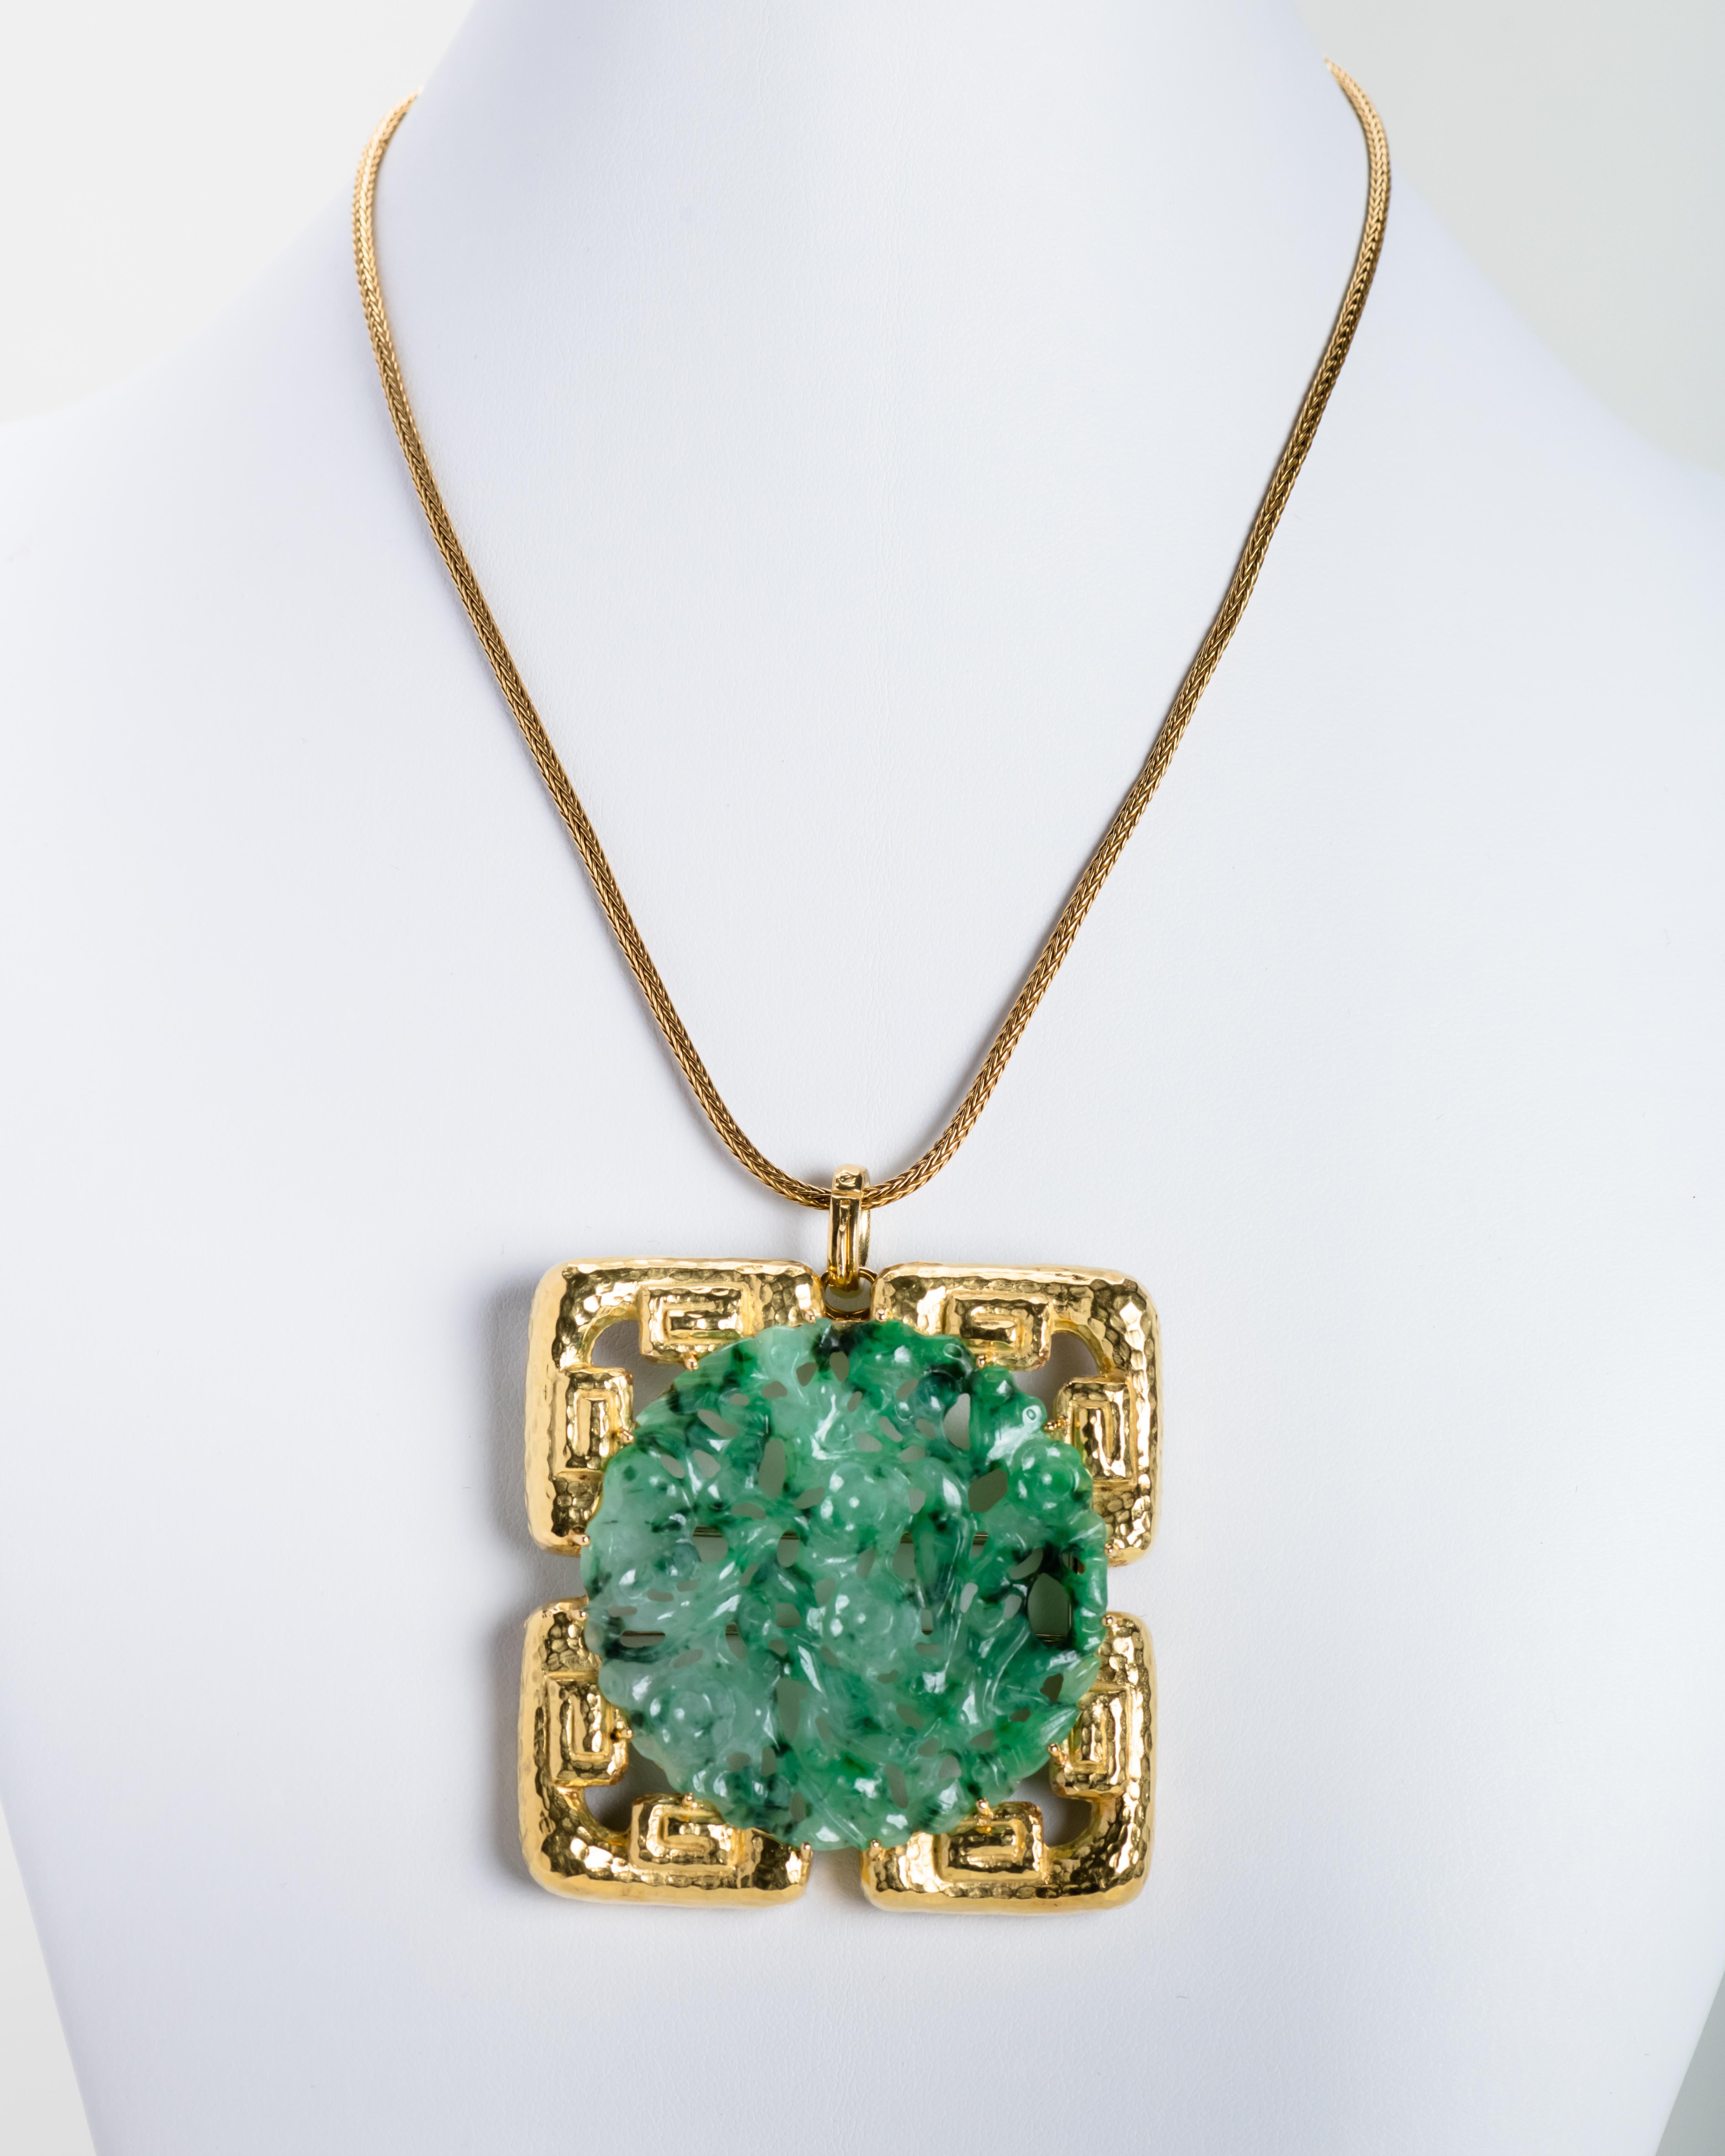 David Webb 18 karat gold pendant/brooch with a geometric rectangular design inset with circular jadeite carving. Circa 1965.

14 Karat gold necklace included.

Size: 2.25